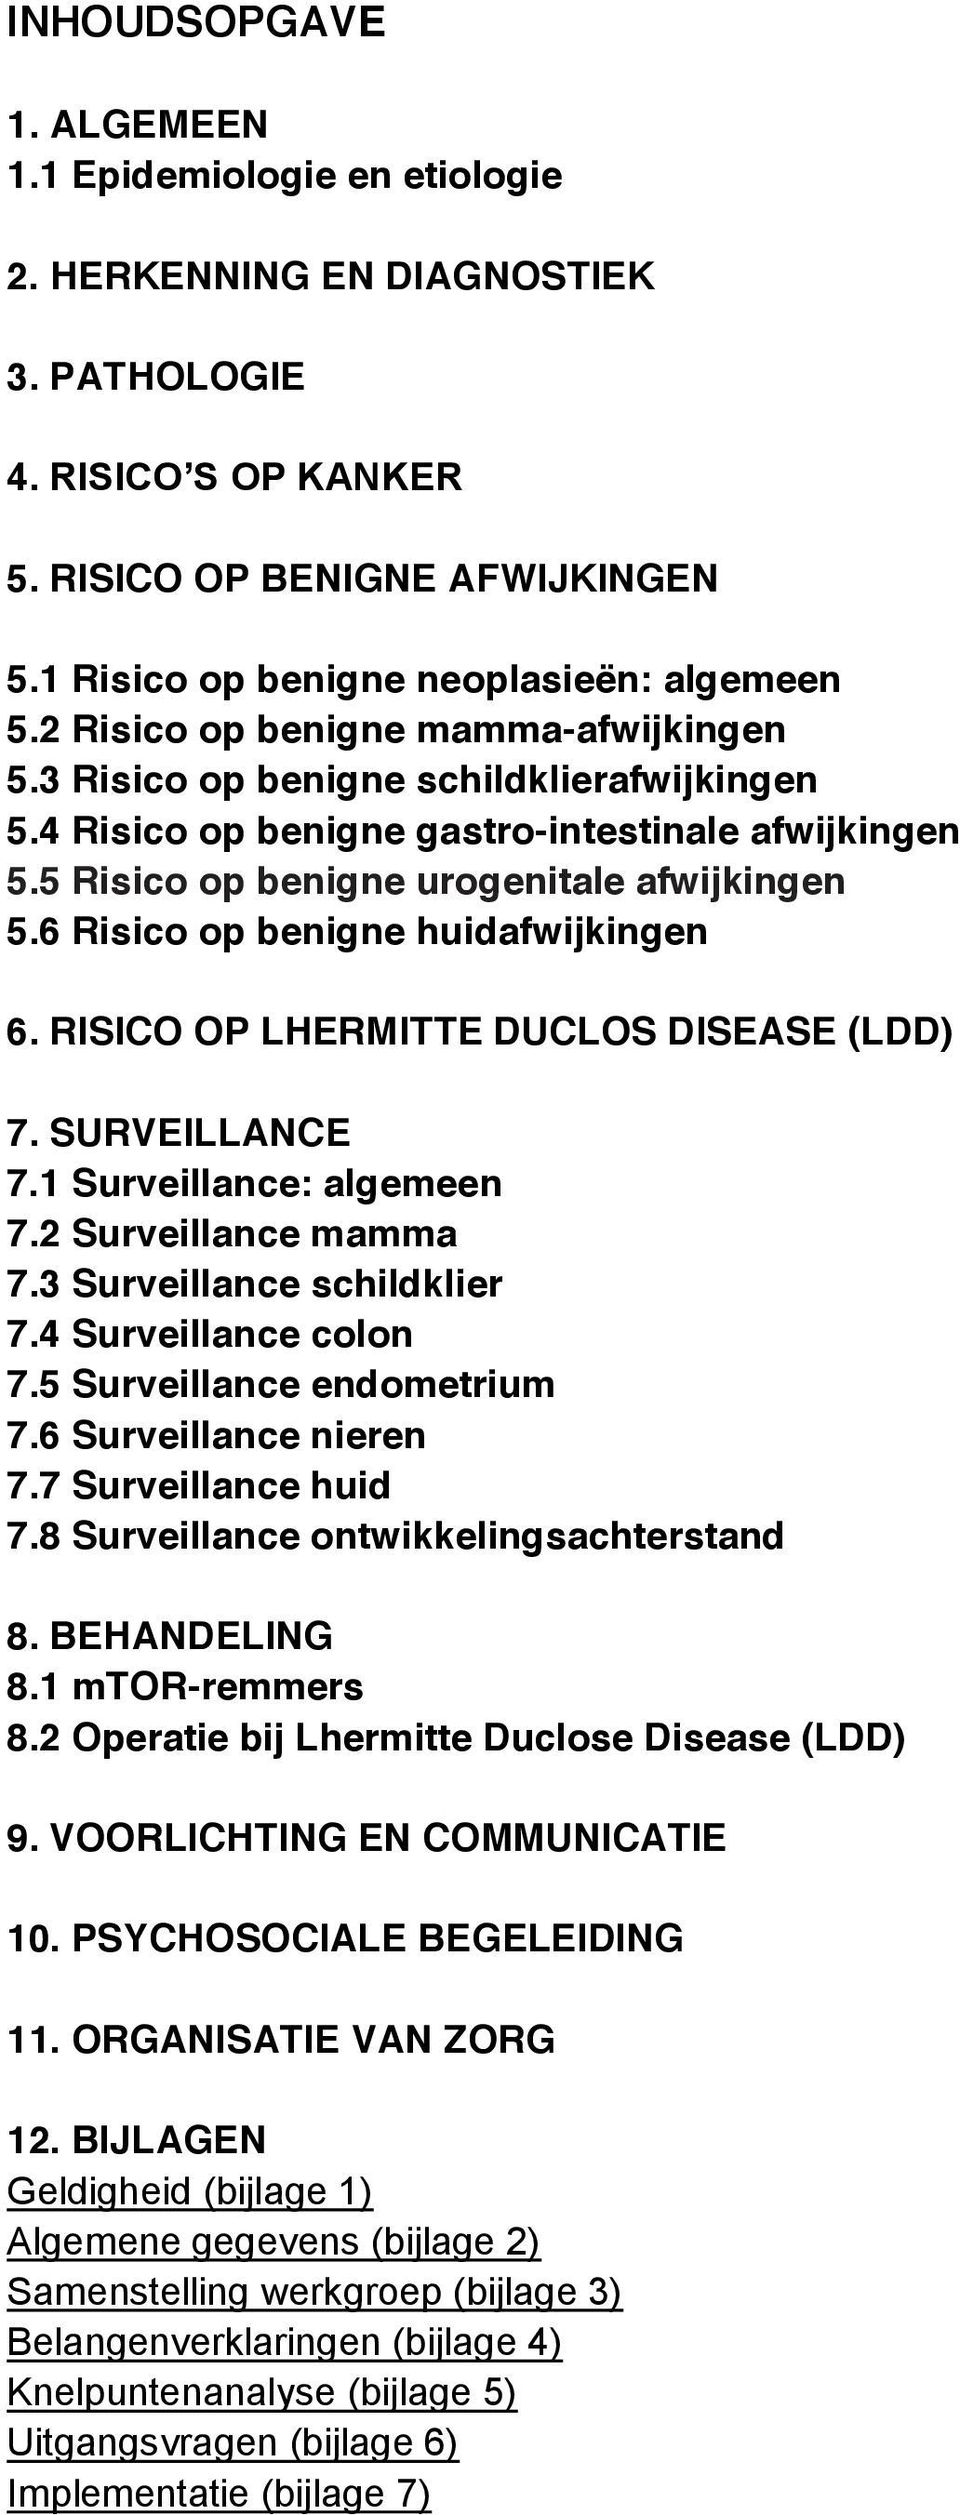 5 Risico op benigne urogenitale afwijkingen 5.6 Risico op benigne huidafwijkingen 6. RISICO OP LHERMITTE DUCLOS DISEASE (LDD) 7. SURVEILLANCE 7.1 Surveillance: algemeen 7.2 Surveillance mamma 7.